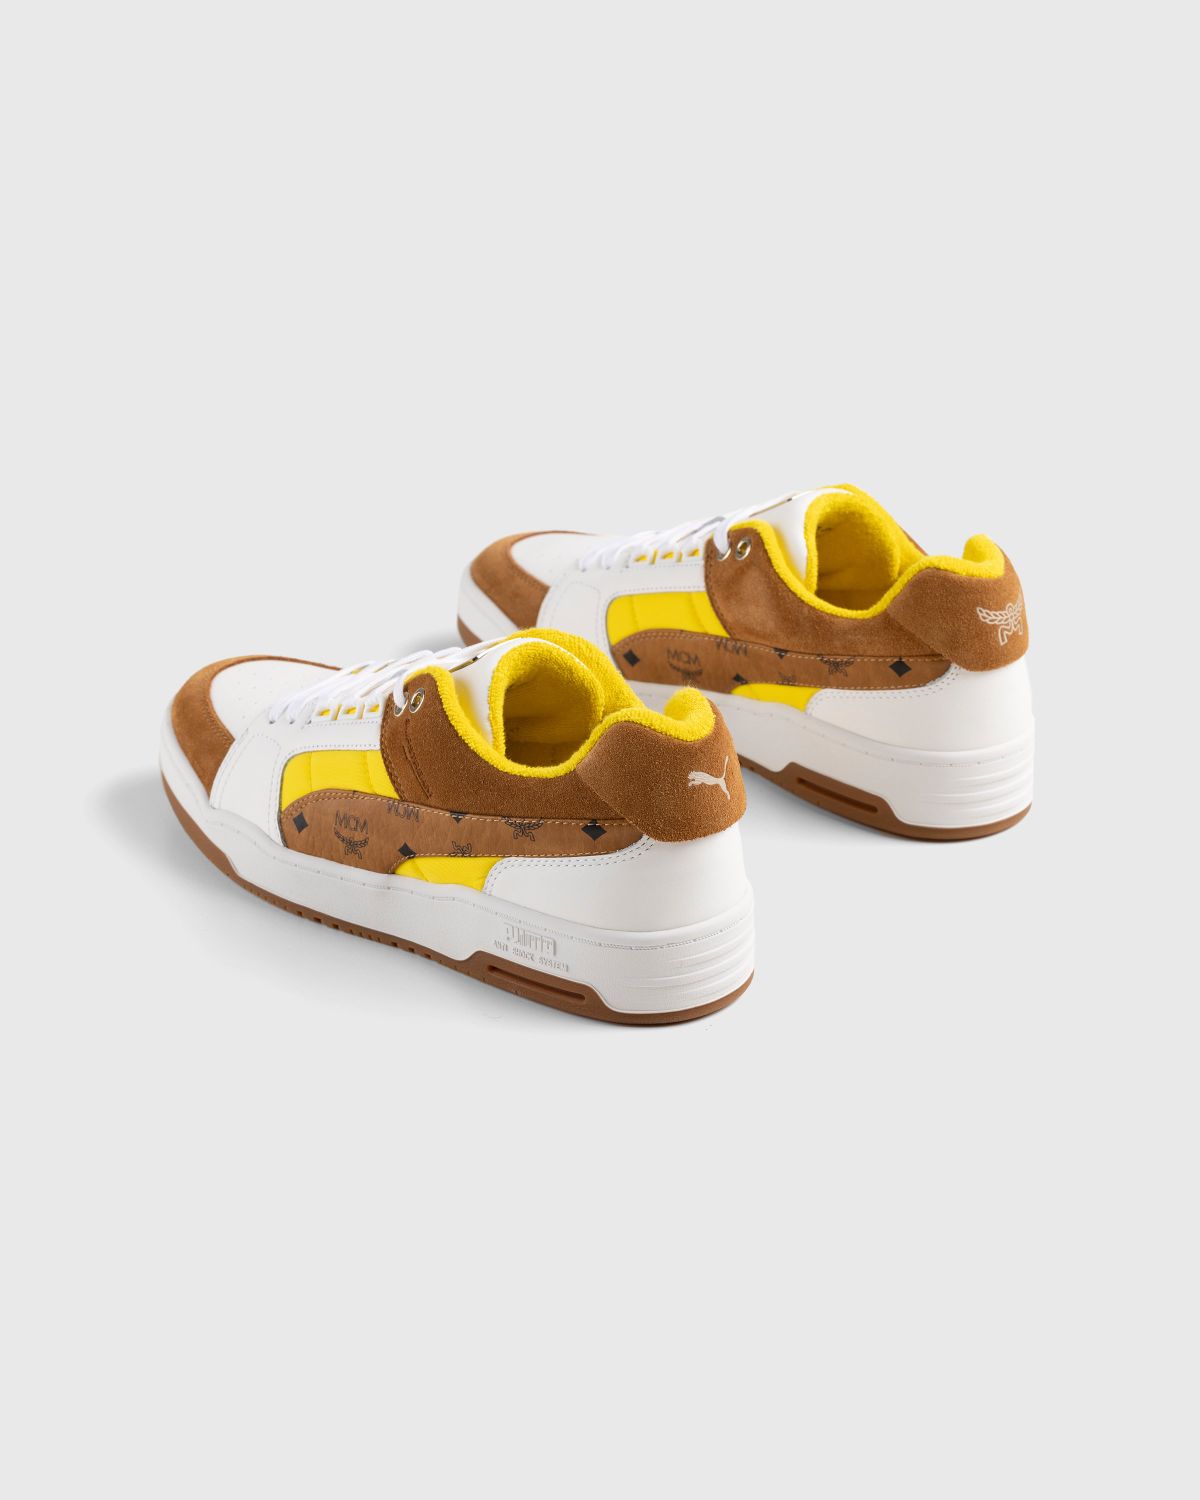 Puma x MCM – Slipstream Lo White/Yellow - Low Top Sneakers - Beige - Image 4